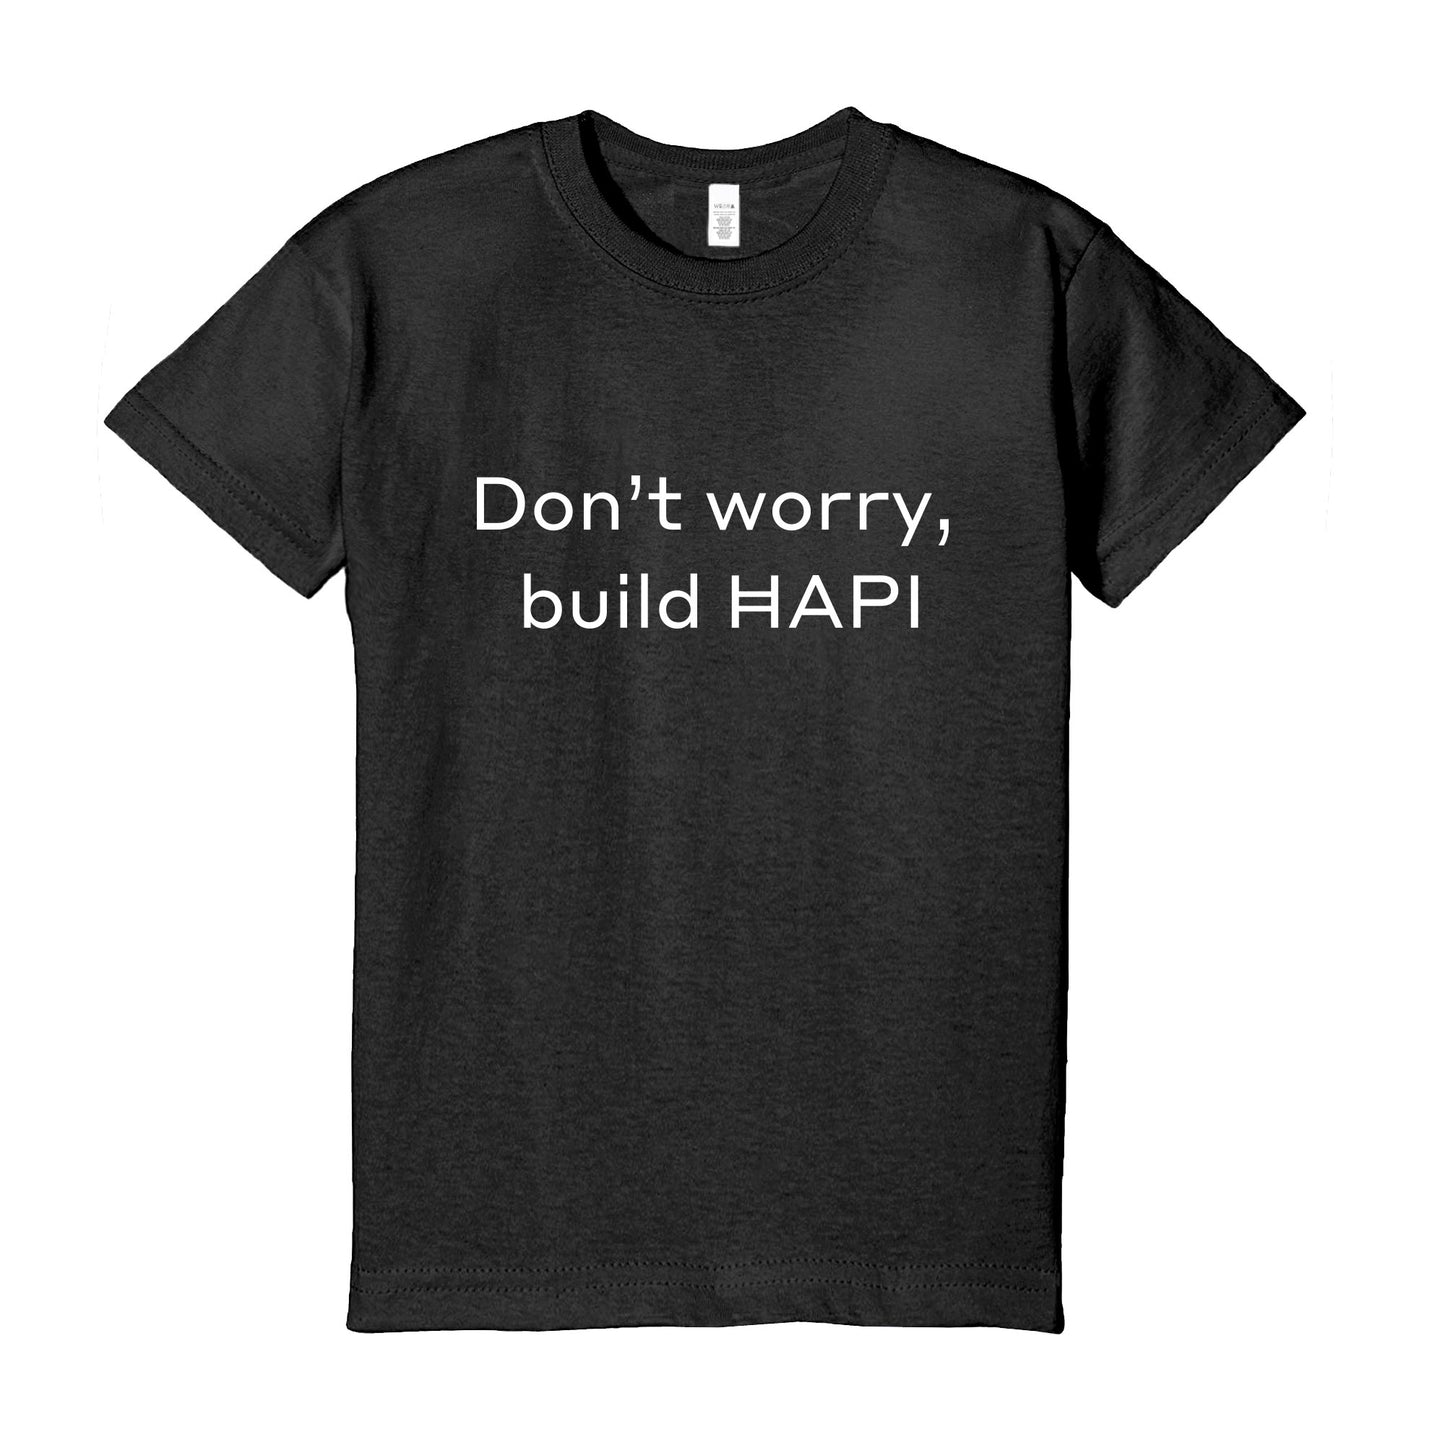 "Build HAPI" T-shirt